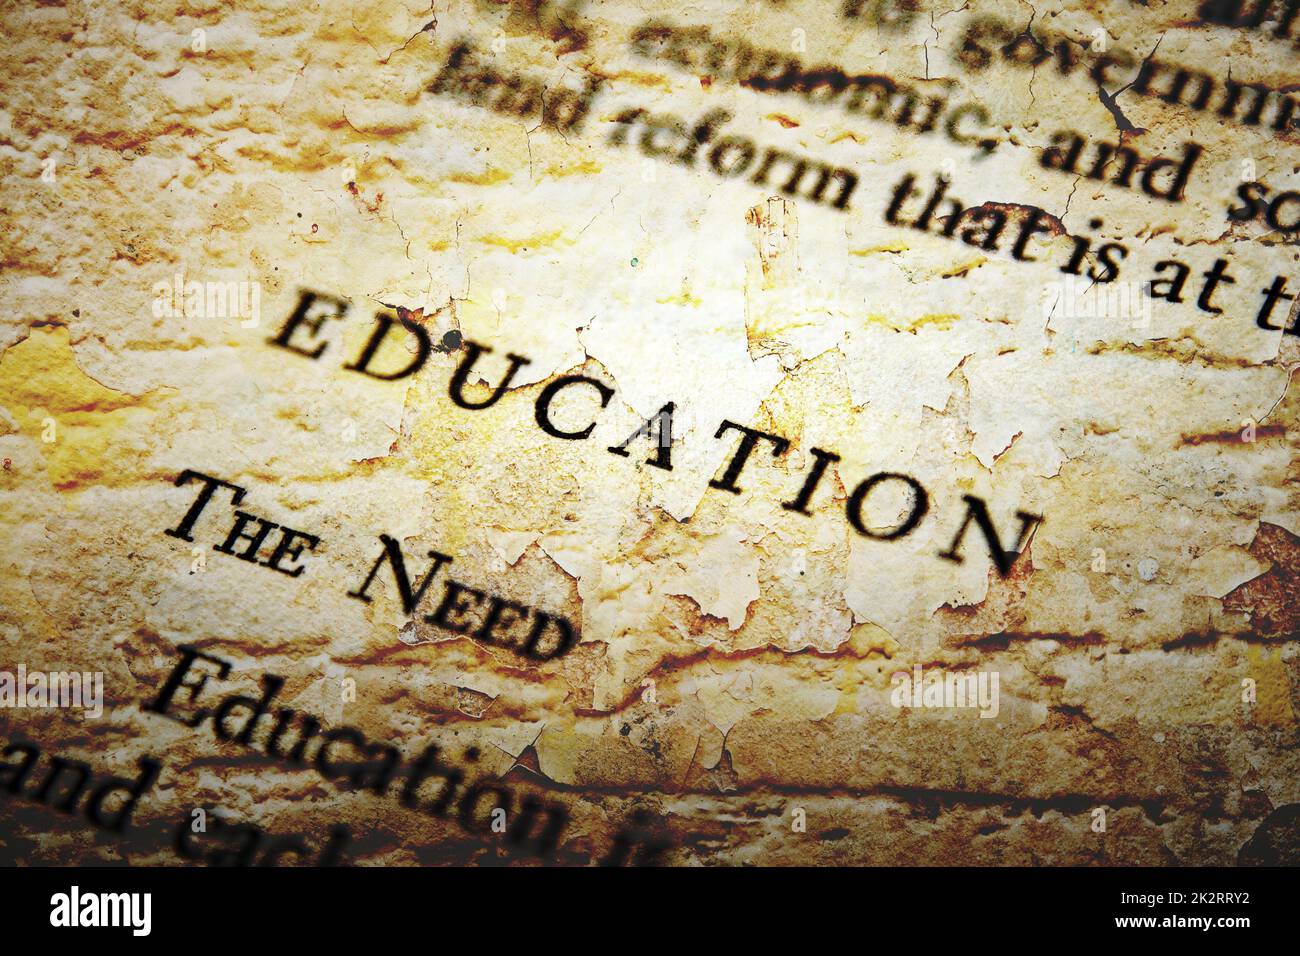 Education concept Stock Photo